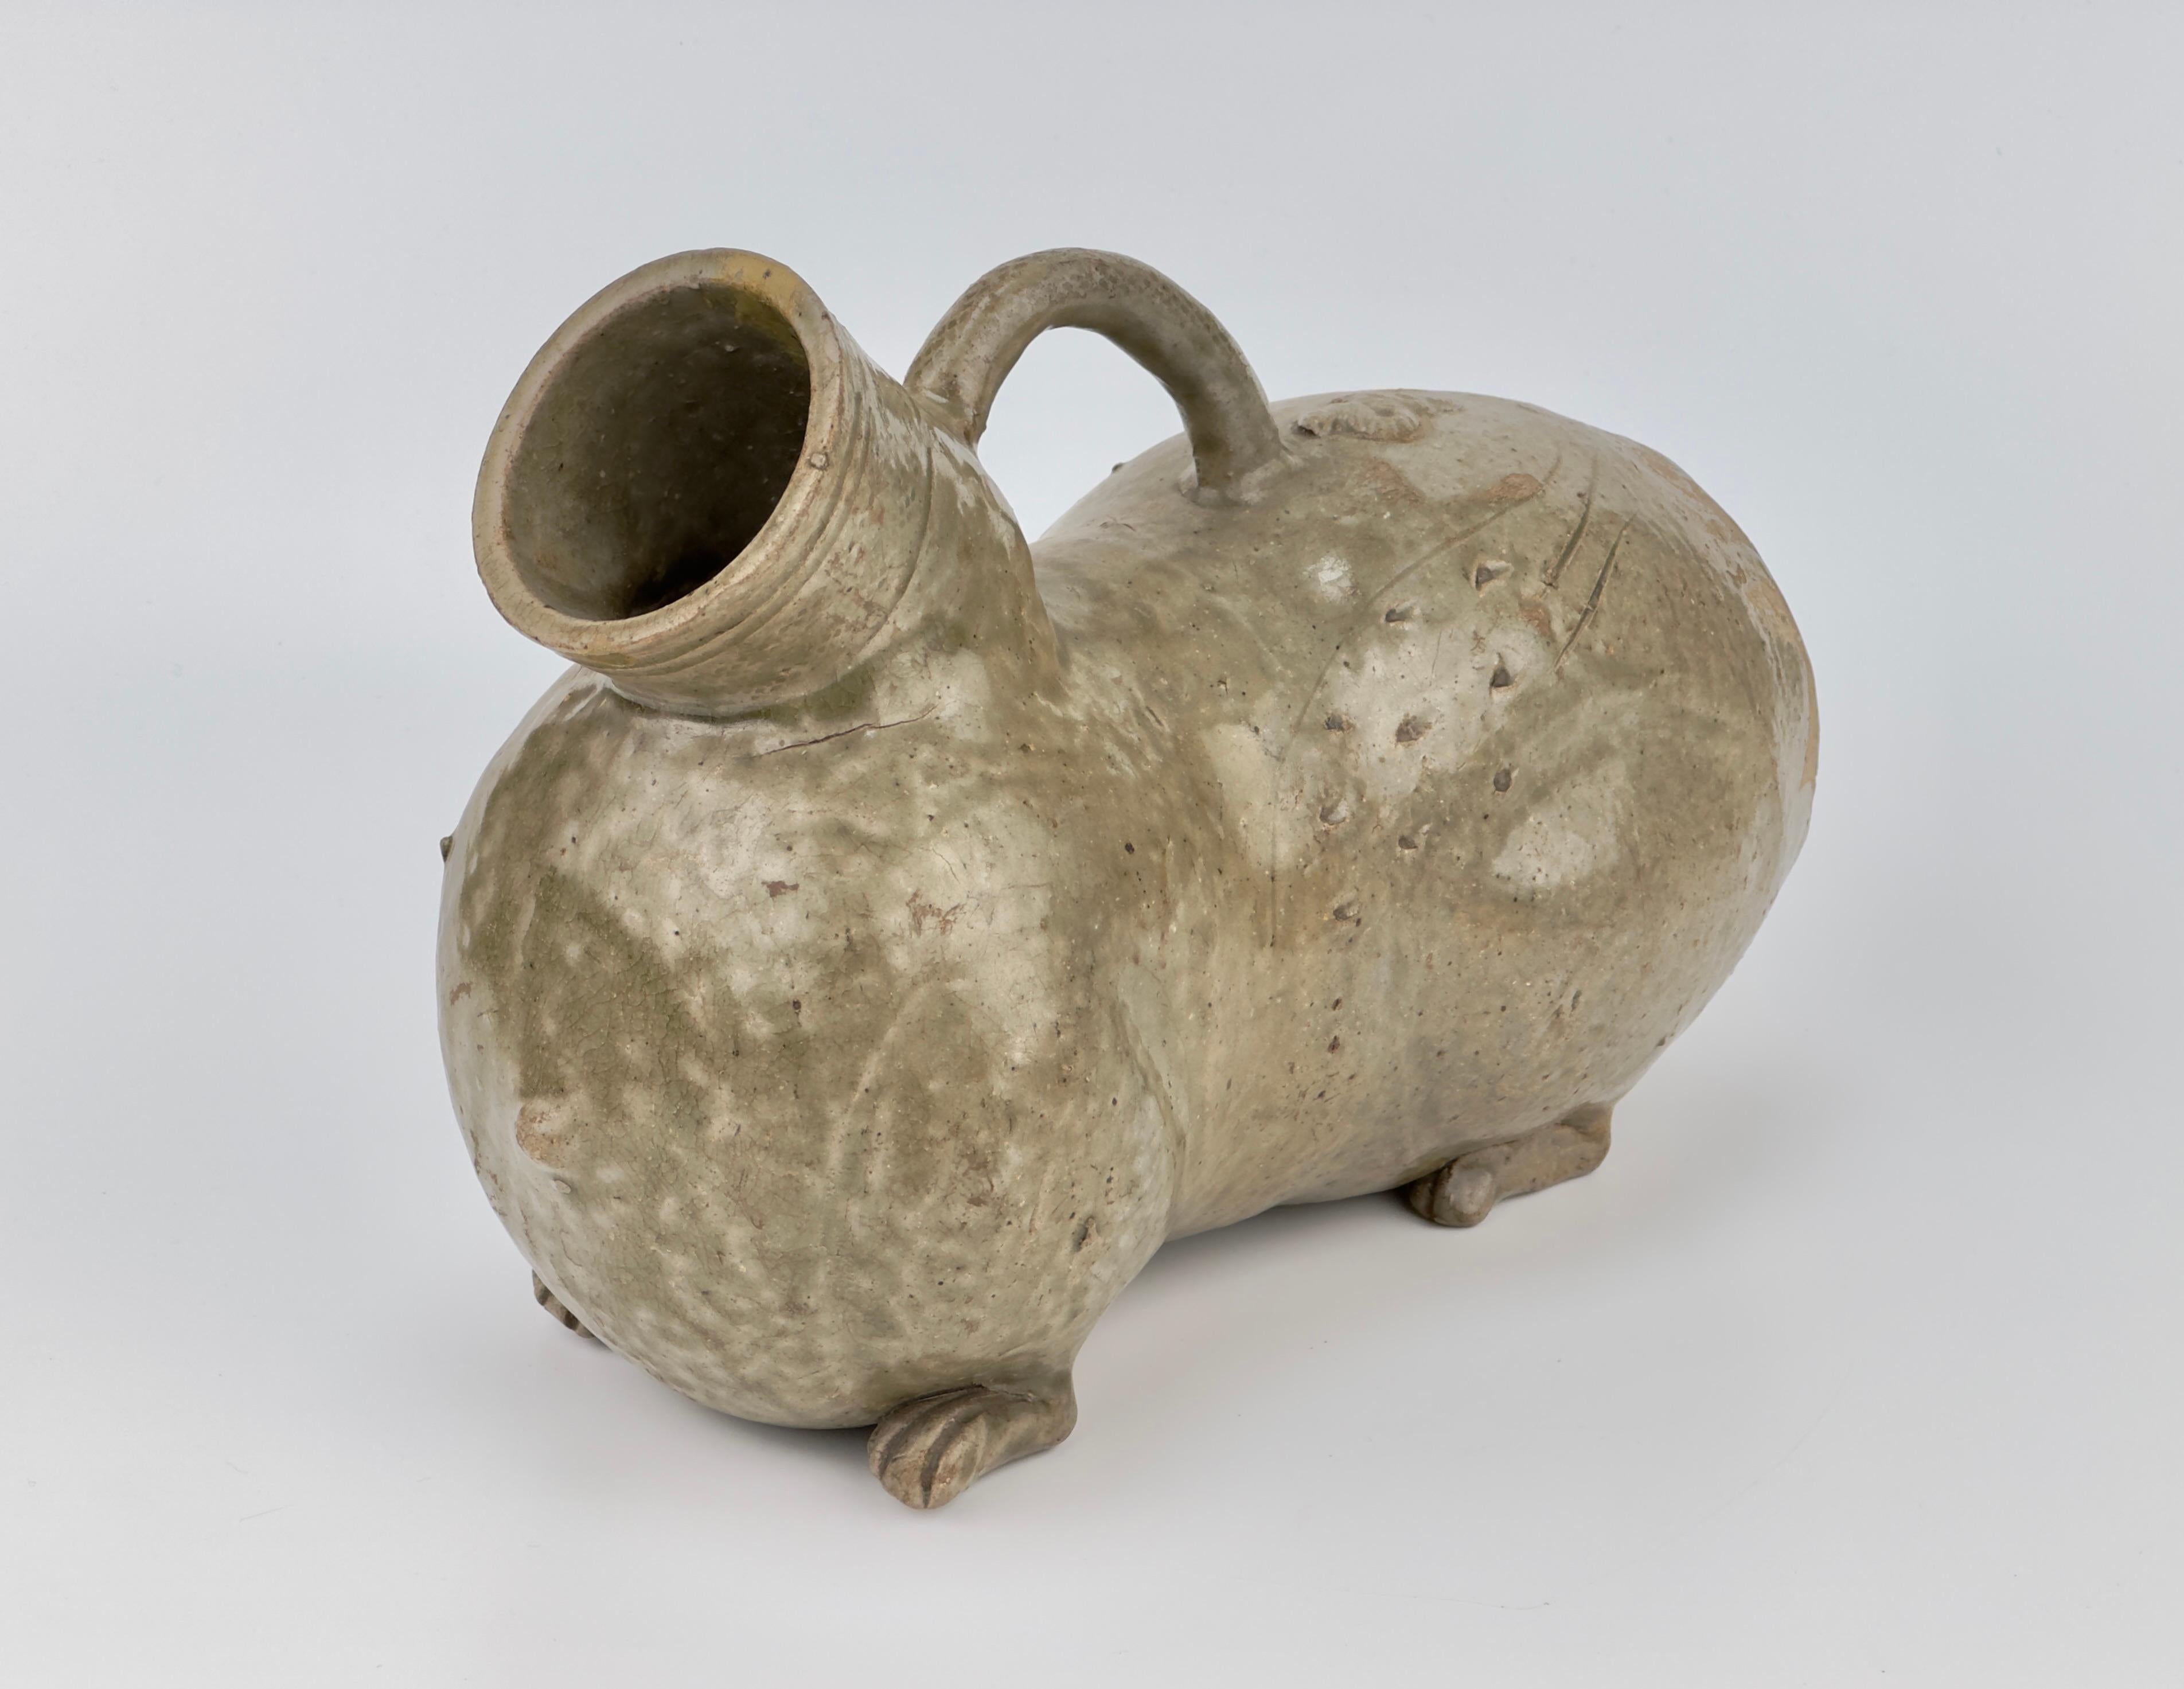 Rare Yue Celadon-Glazed Figural Vessel, Western Jin dynasty (265-420) For Sale 10